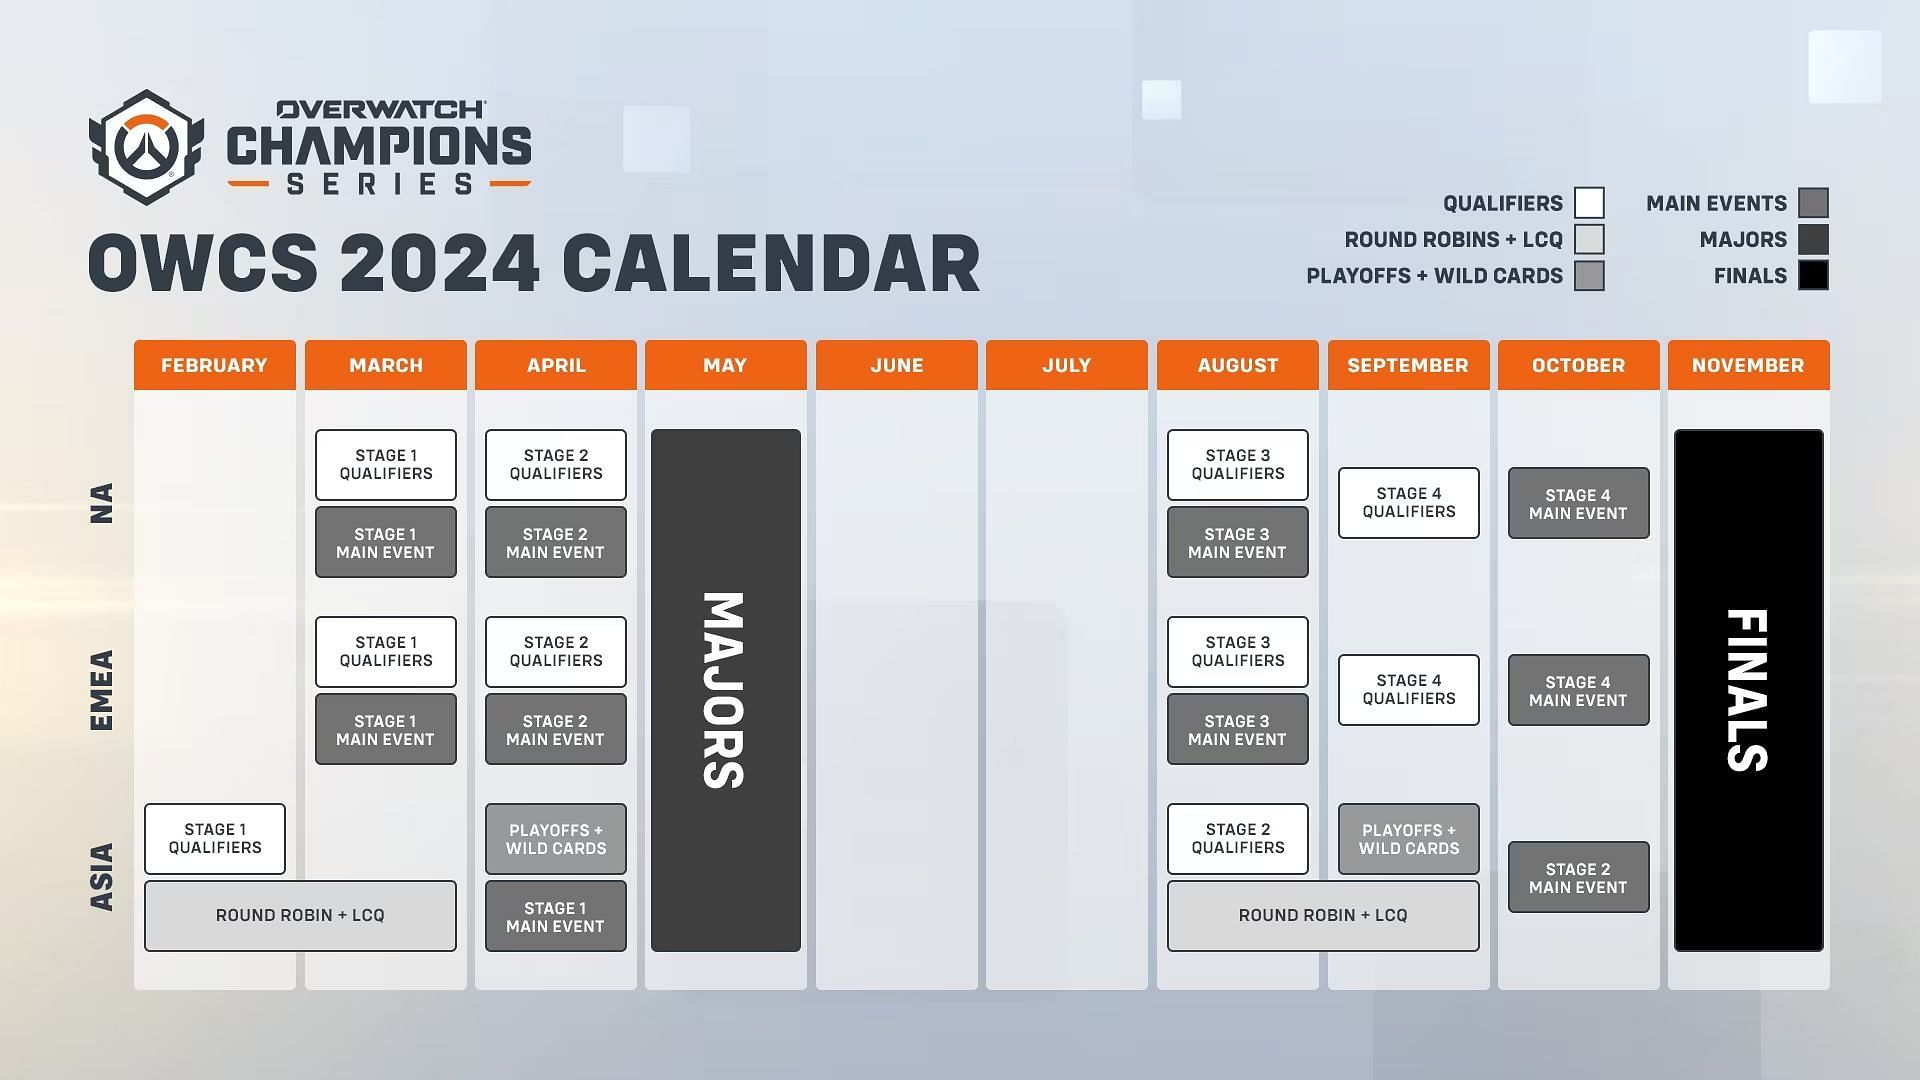 Overwatch Champions Series 2024 Calendar (Image via Blizzard Entertainment)